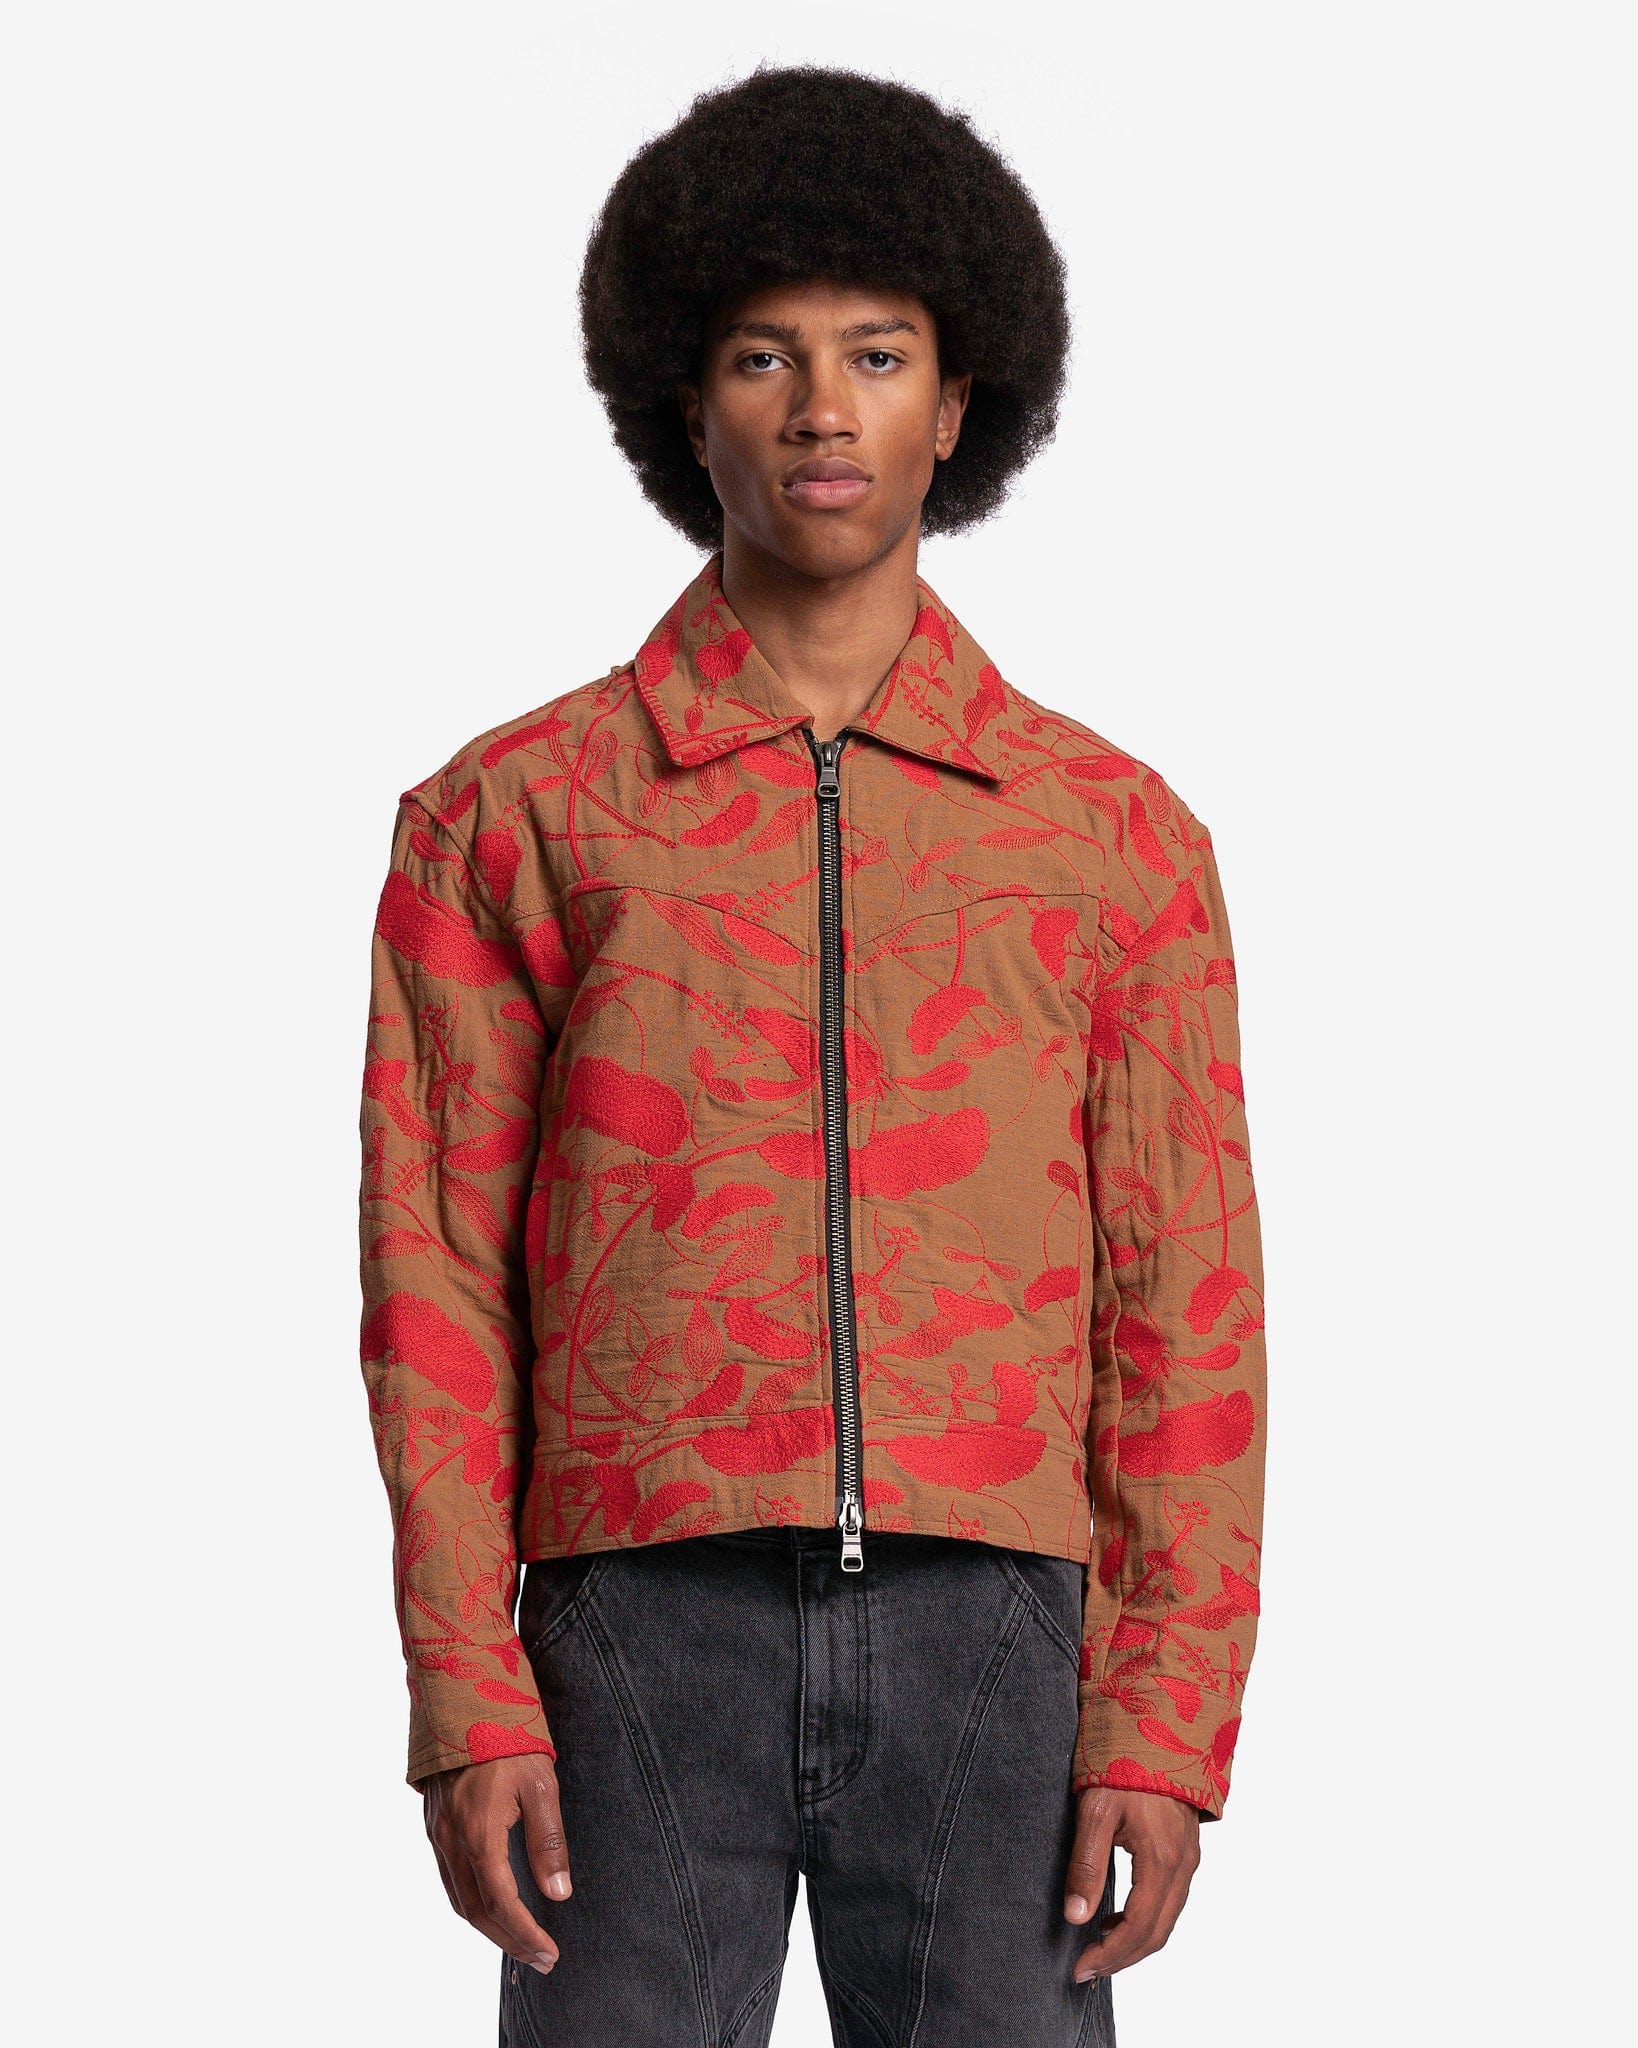 Flower Embroidery Zip-Up Jacket in Beige